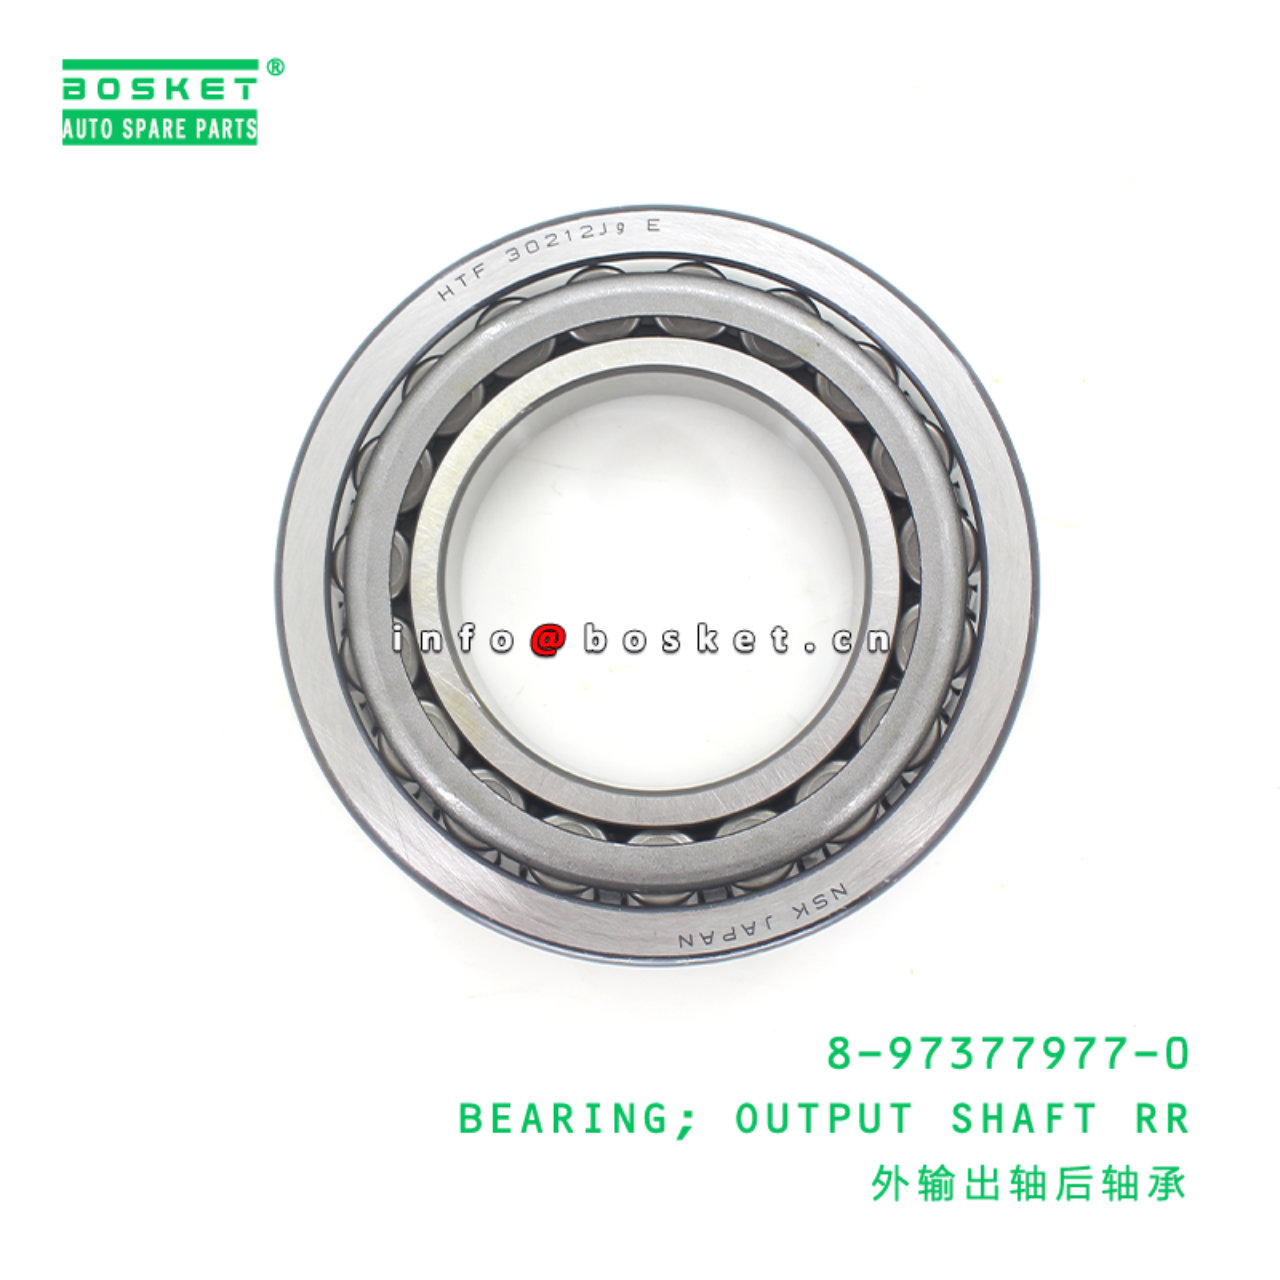 8-97377977-0 Output Shaft Rear Bearing 8973779770 Suitable for ISUZU FRR FTR